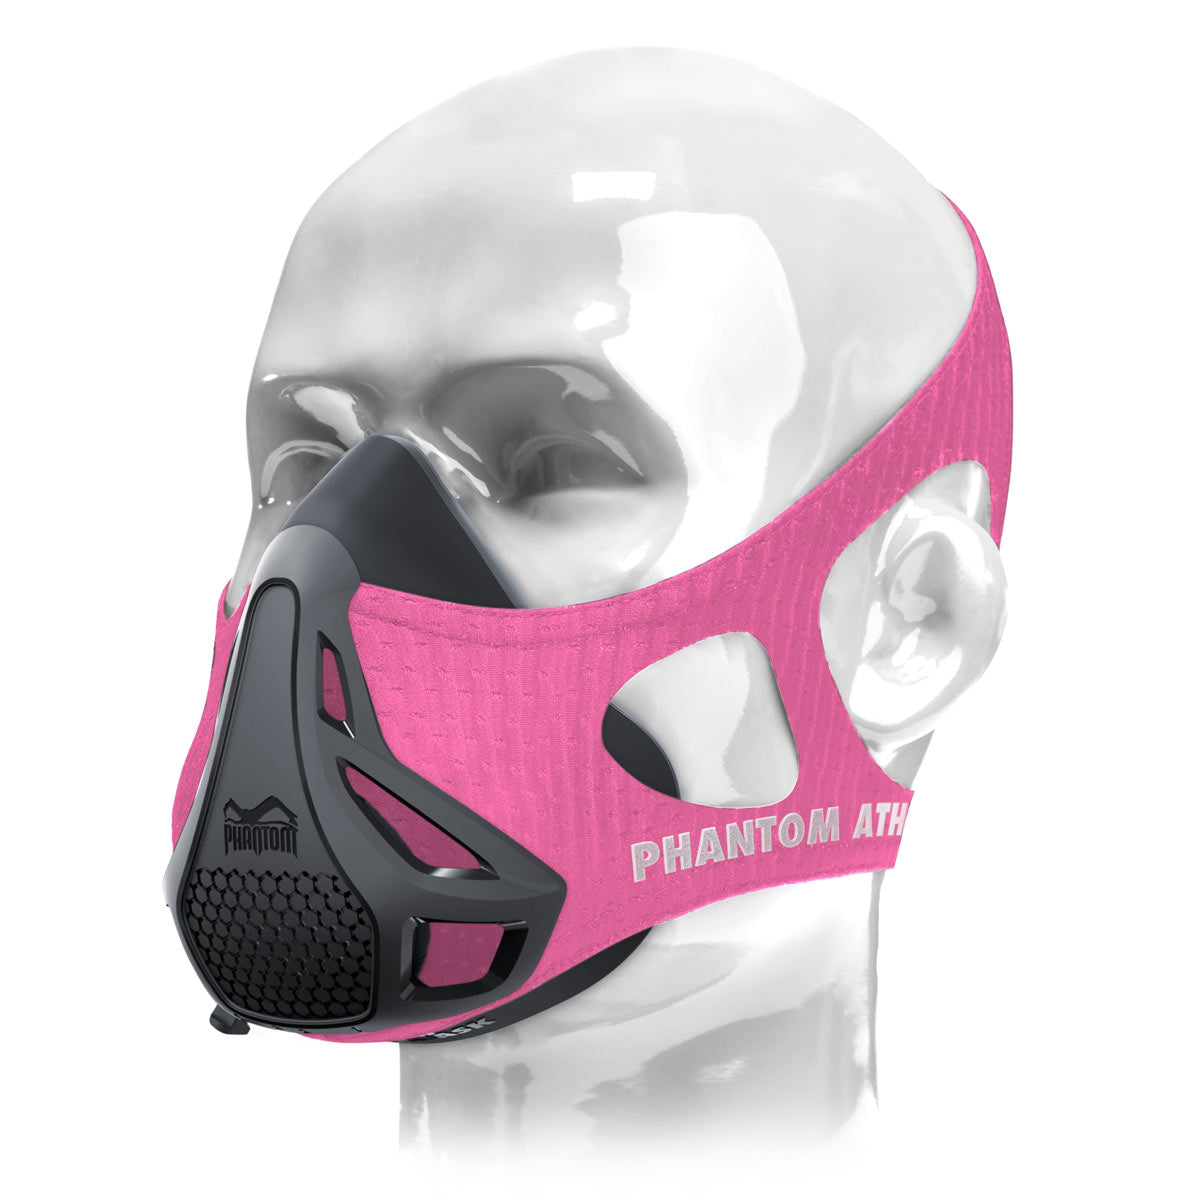 Phantom training mask - pink/black